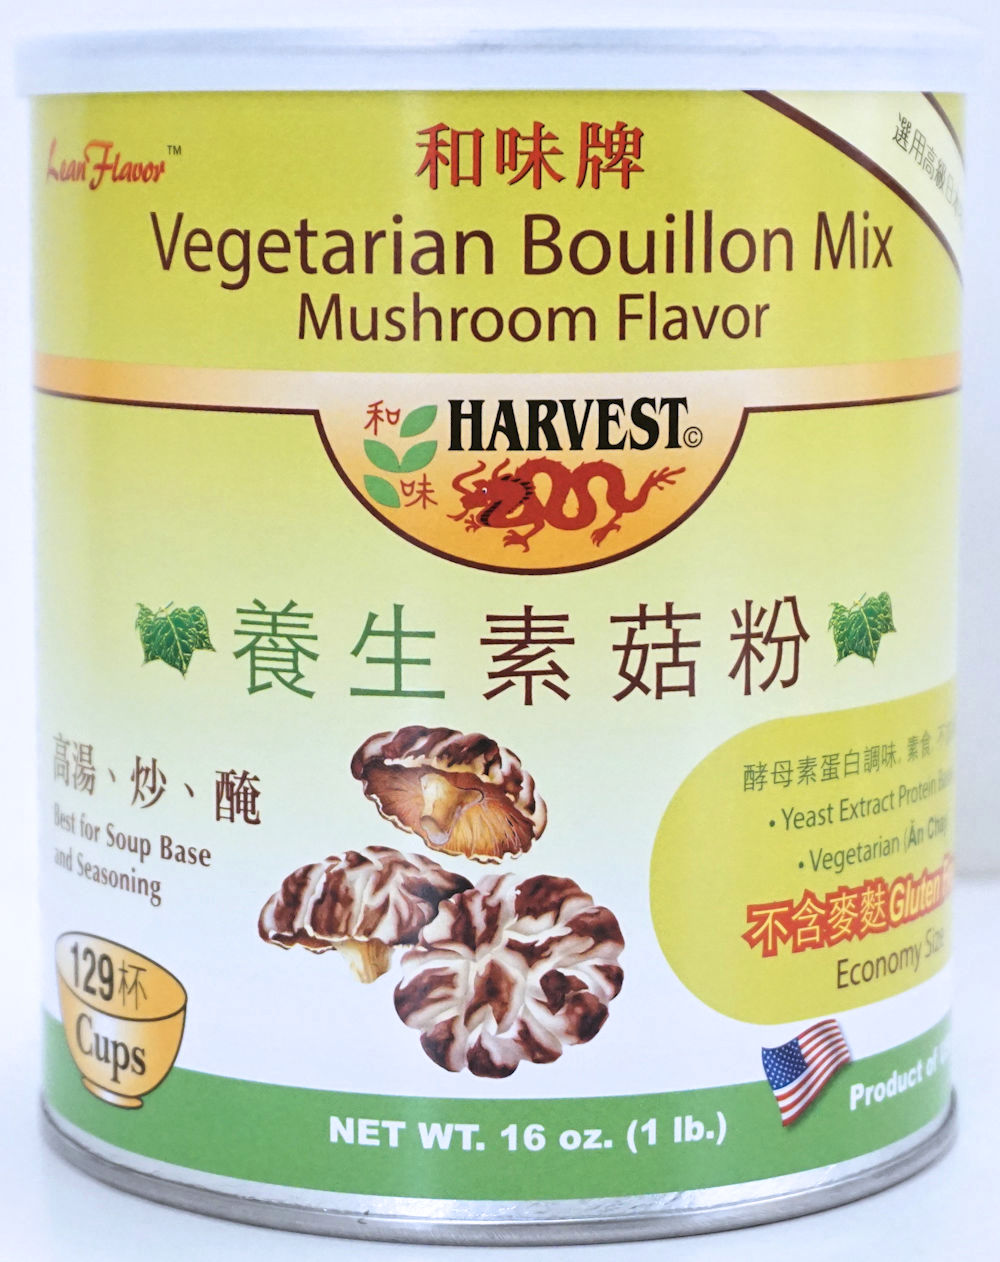 Harvest 2000 Vegetarian Bouillon Mix Mushroom Flavor素食调味料 素菇粉